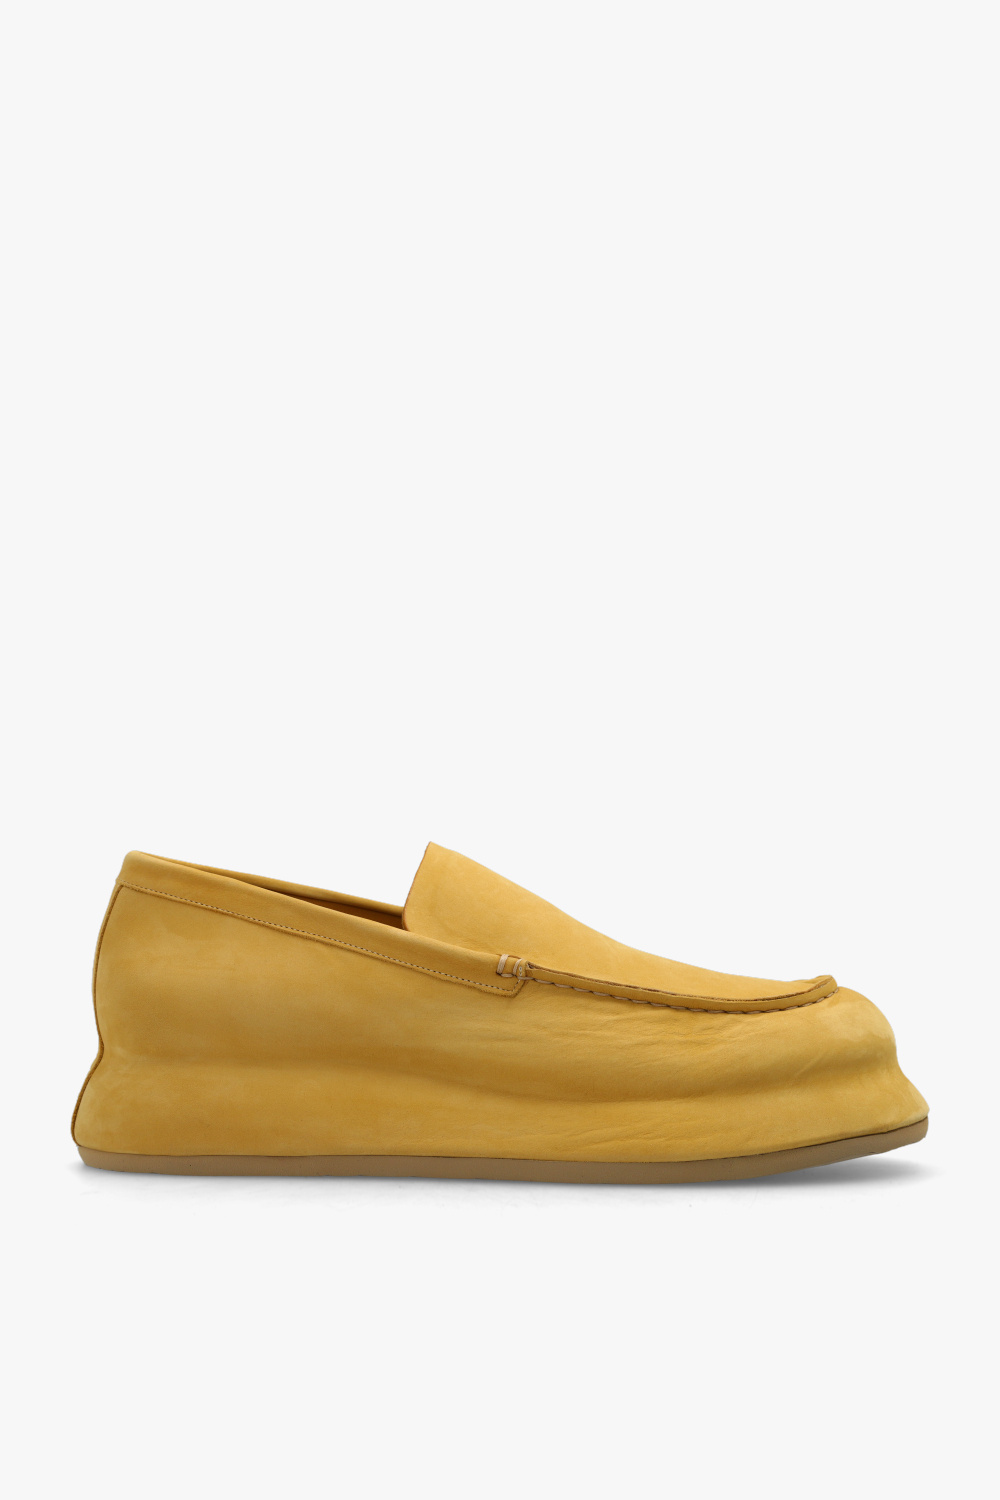 Jacquemus ‘Bricciola’ suede shoes